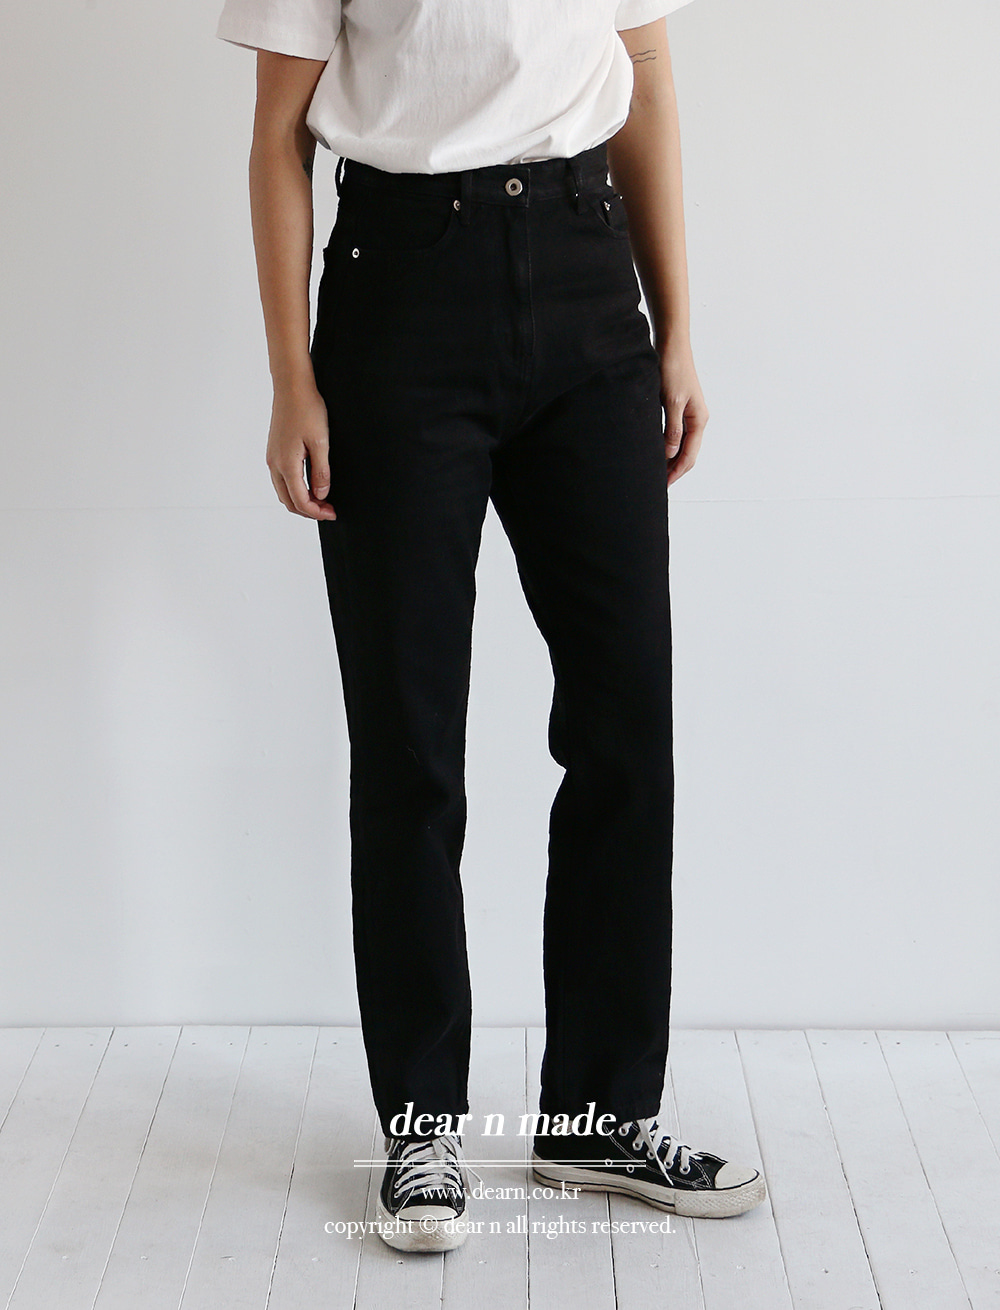 (dear n) alt black jeans